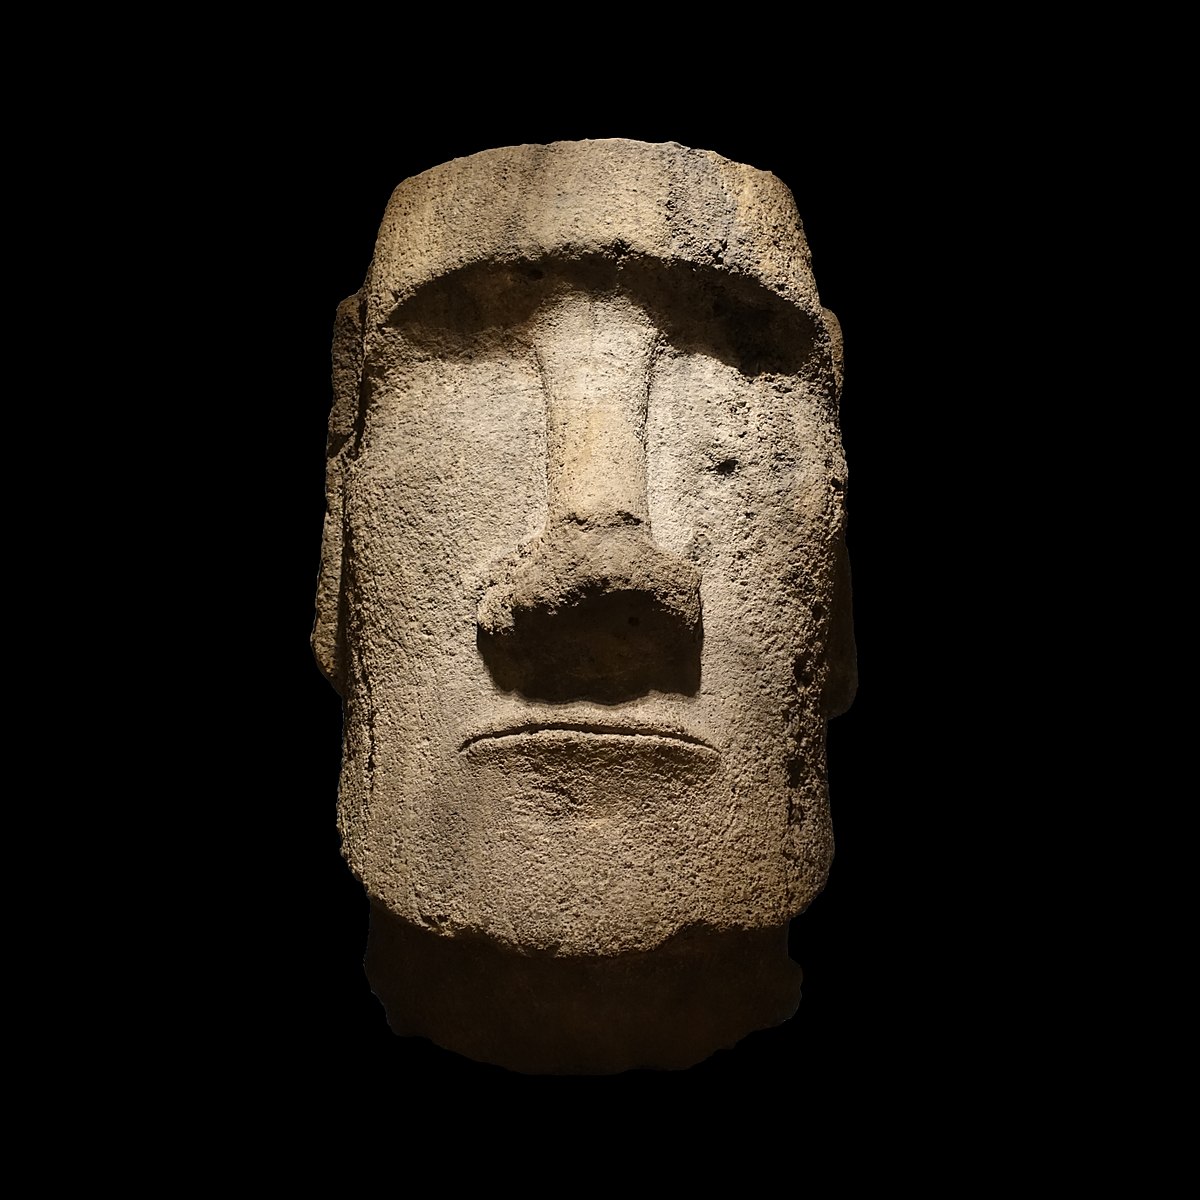 1200px-Moai-71.1935.61.1-DSC00033-black.jpg